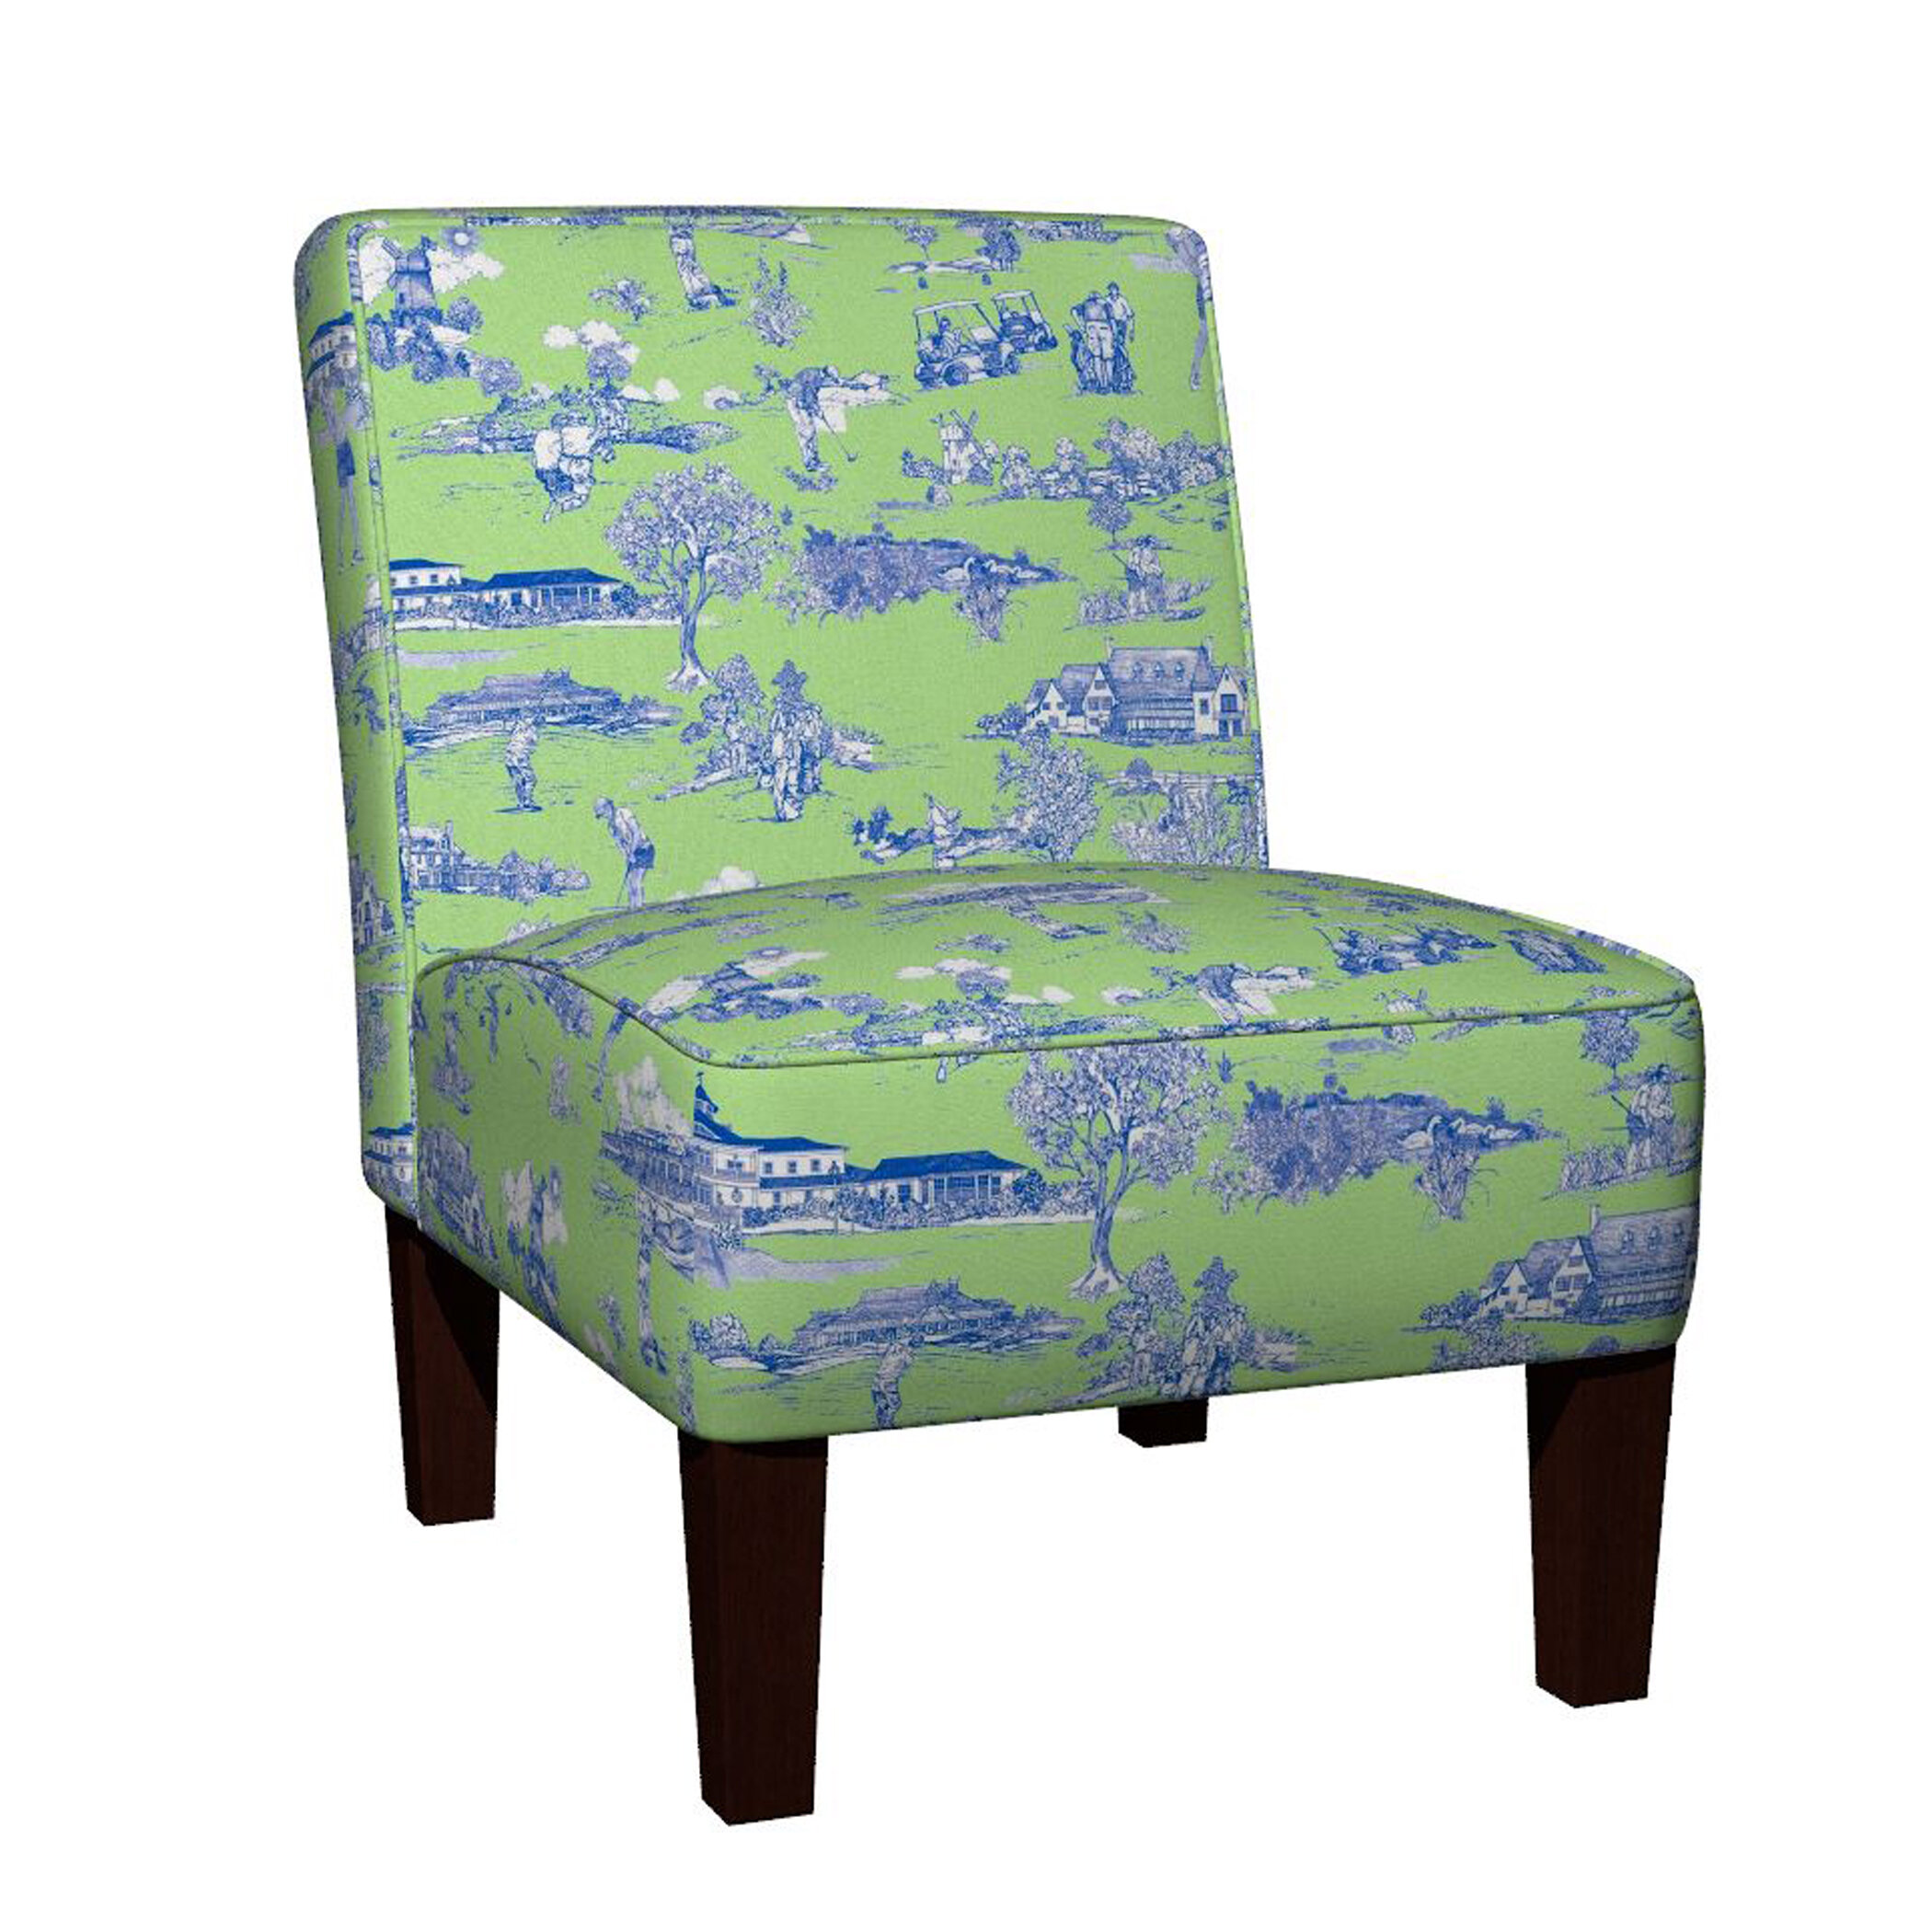 4.Spring and royal blue chair.jpg